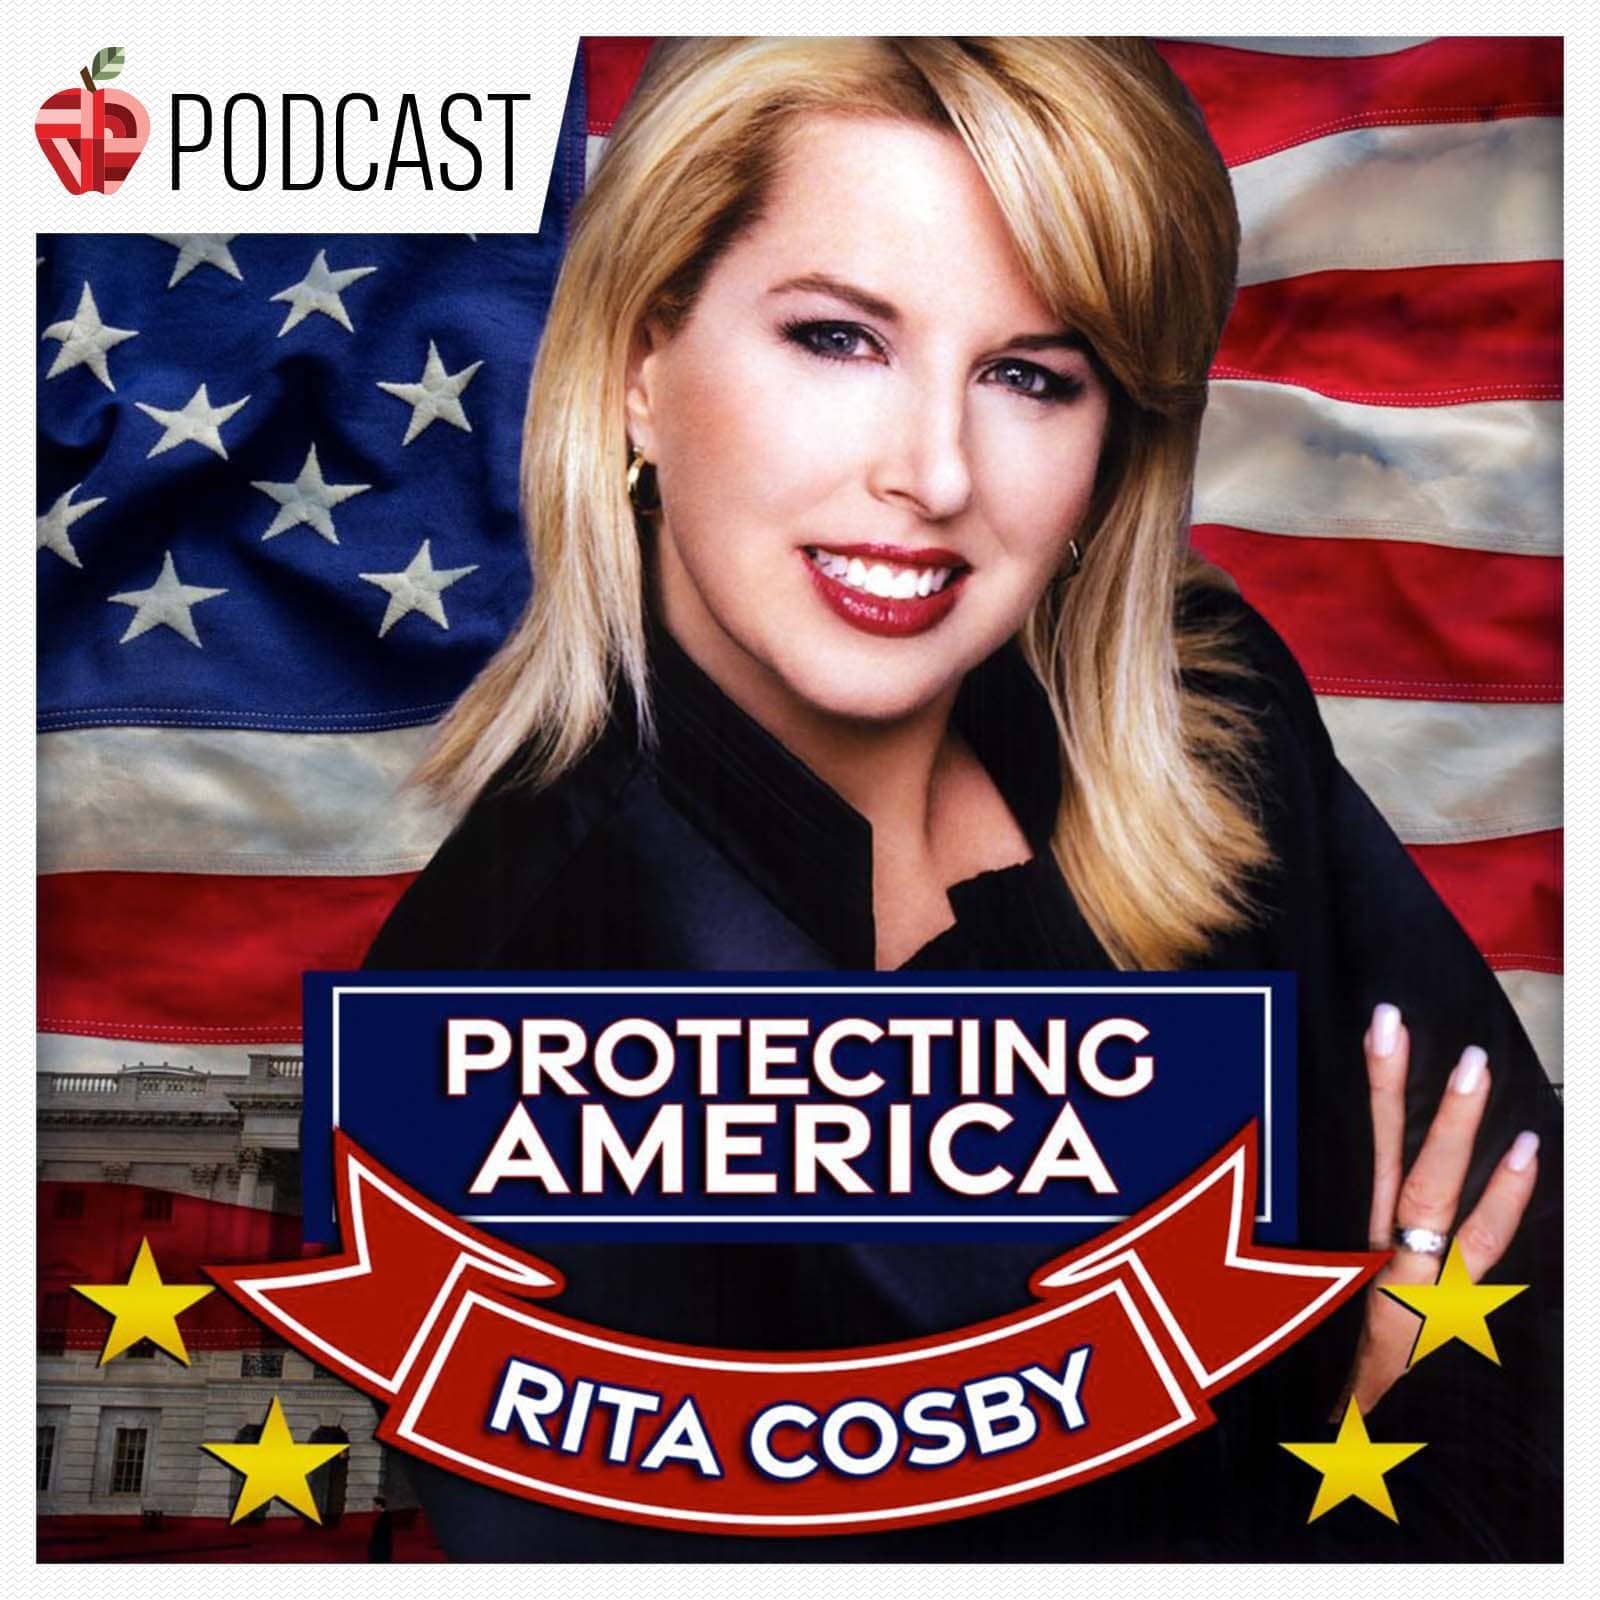 rita-cosby-protecting-america-correct-podcast-new-logo571573